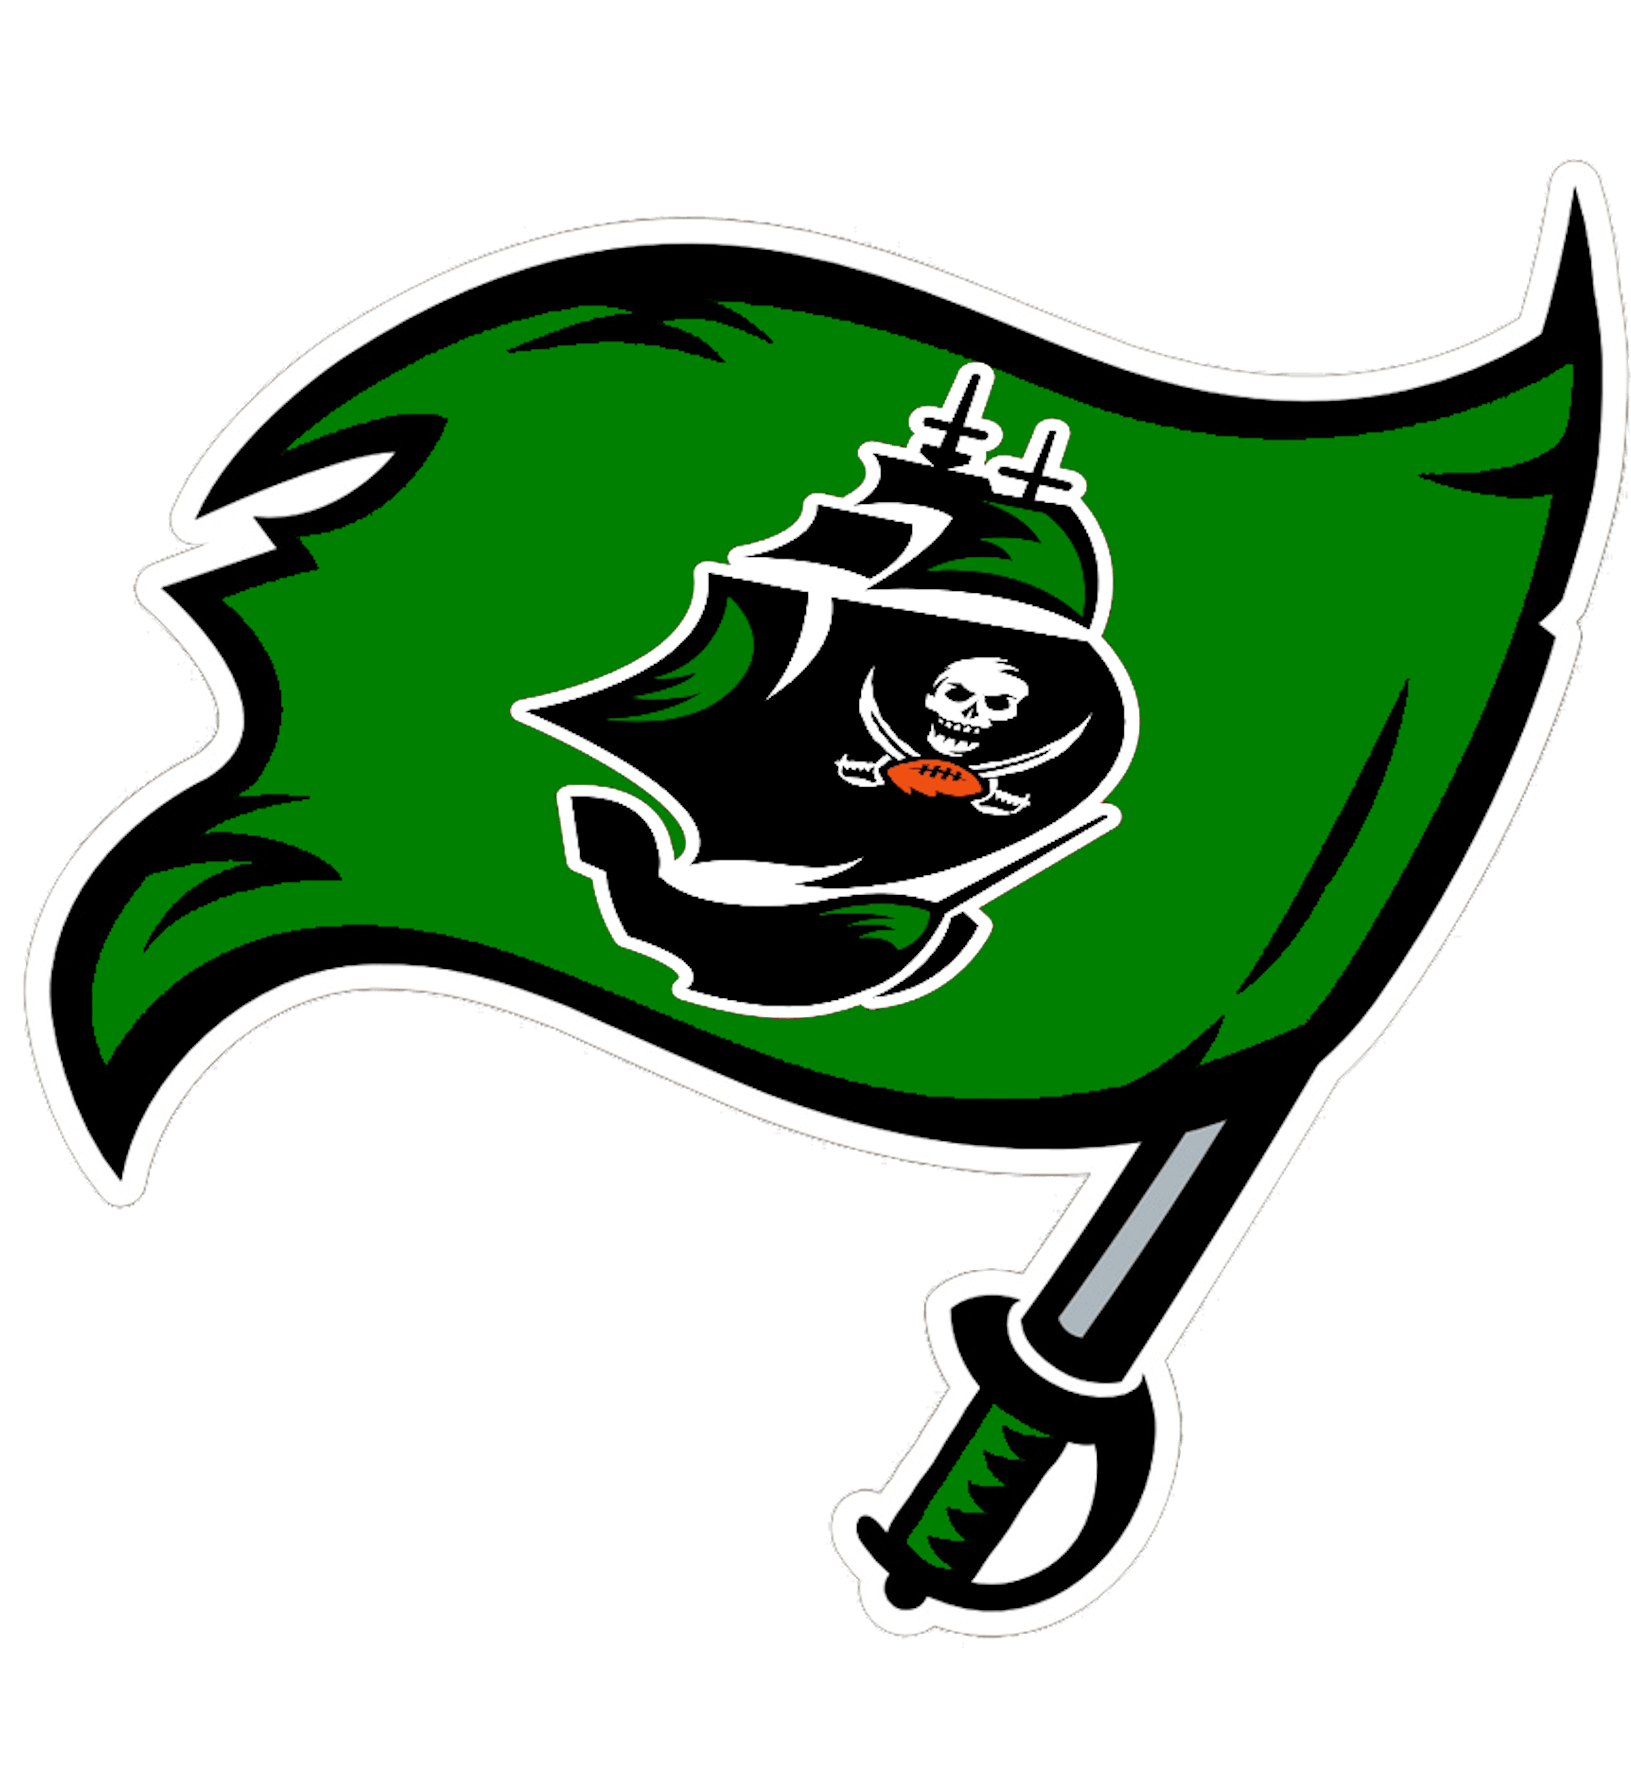 Green Pirate Logo - Green Bucks Flag With Ship. Free Image clip